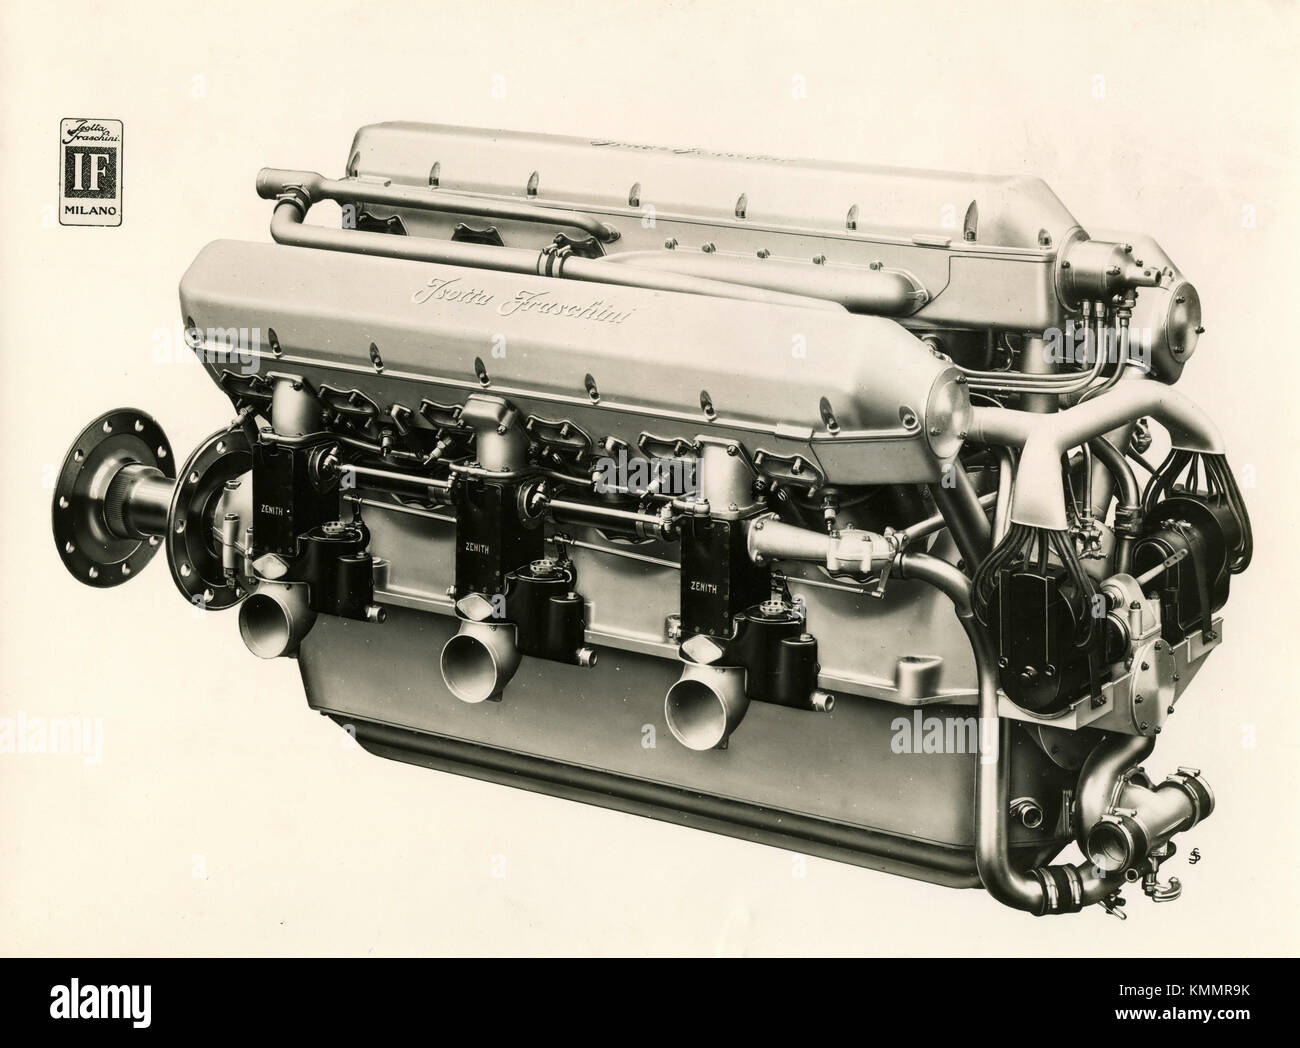 Aviation engine Isotta Fraschini Asso 750, Italy 1920s Stock Photo